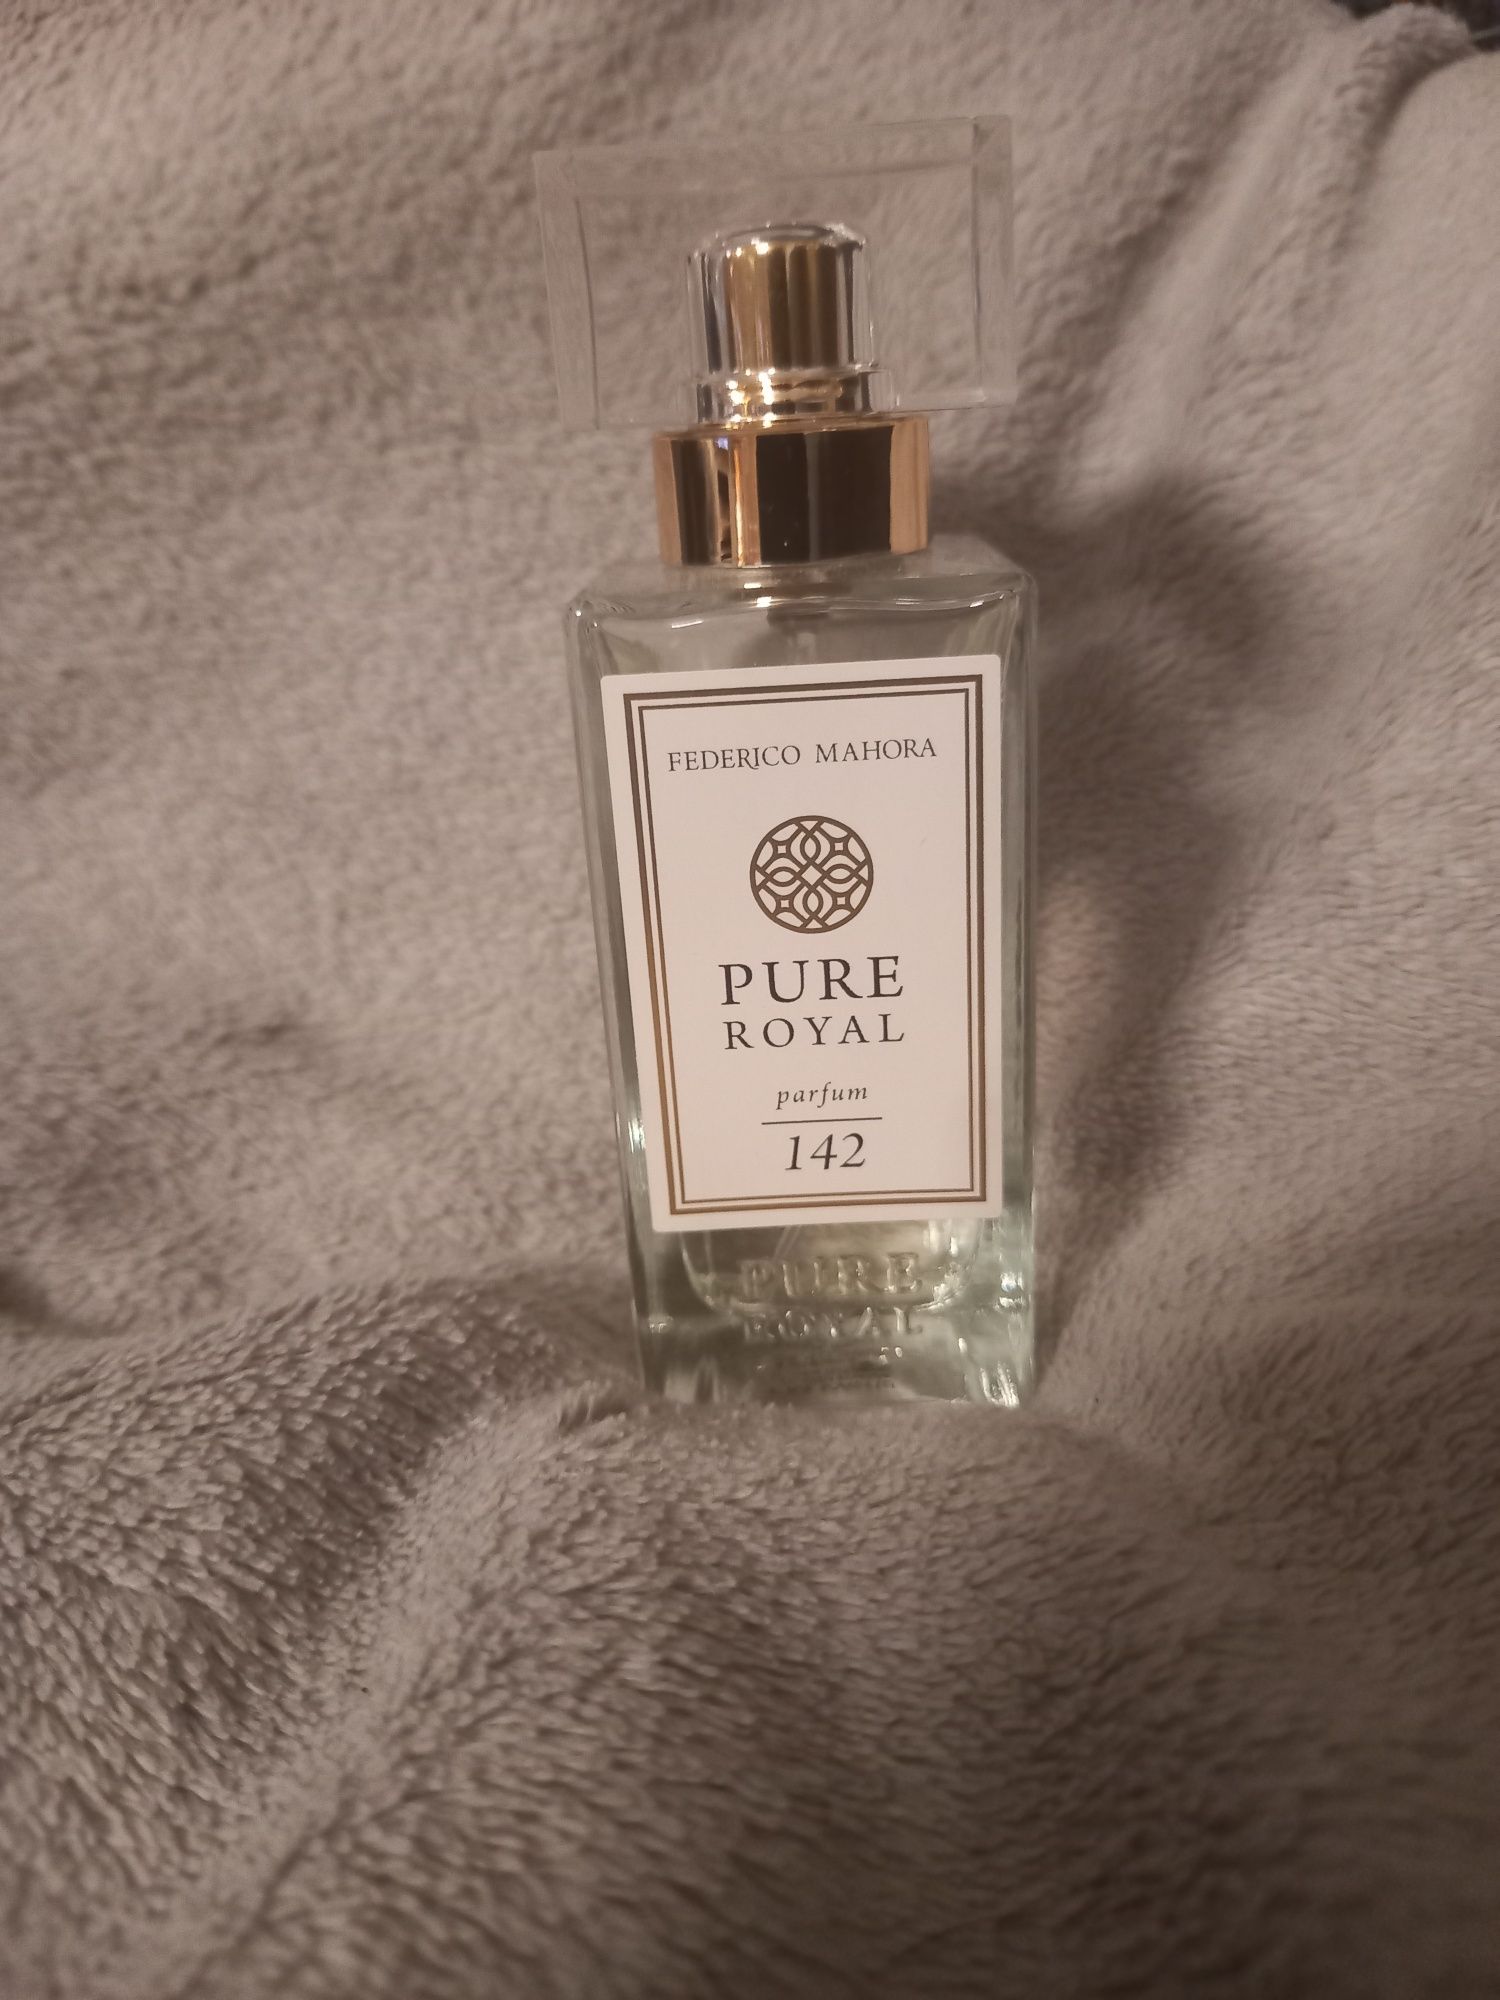 Federico Mahora Pure Royal perfum 142 FM